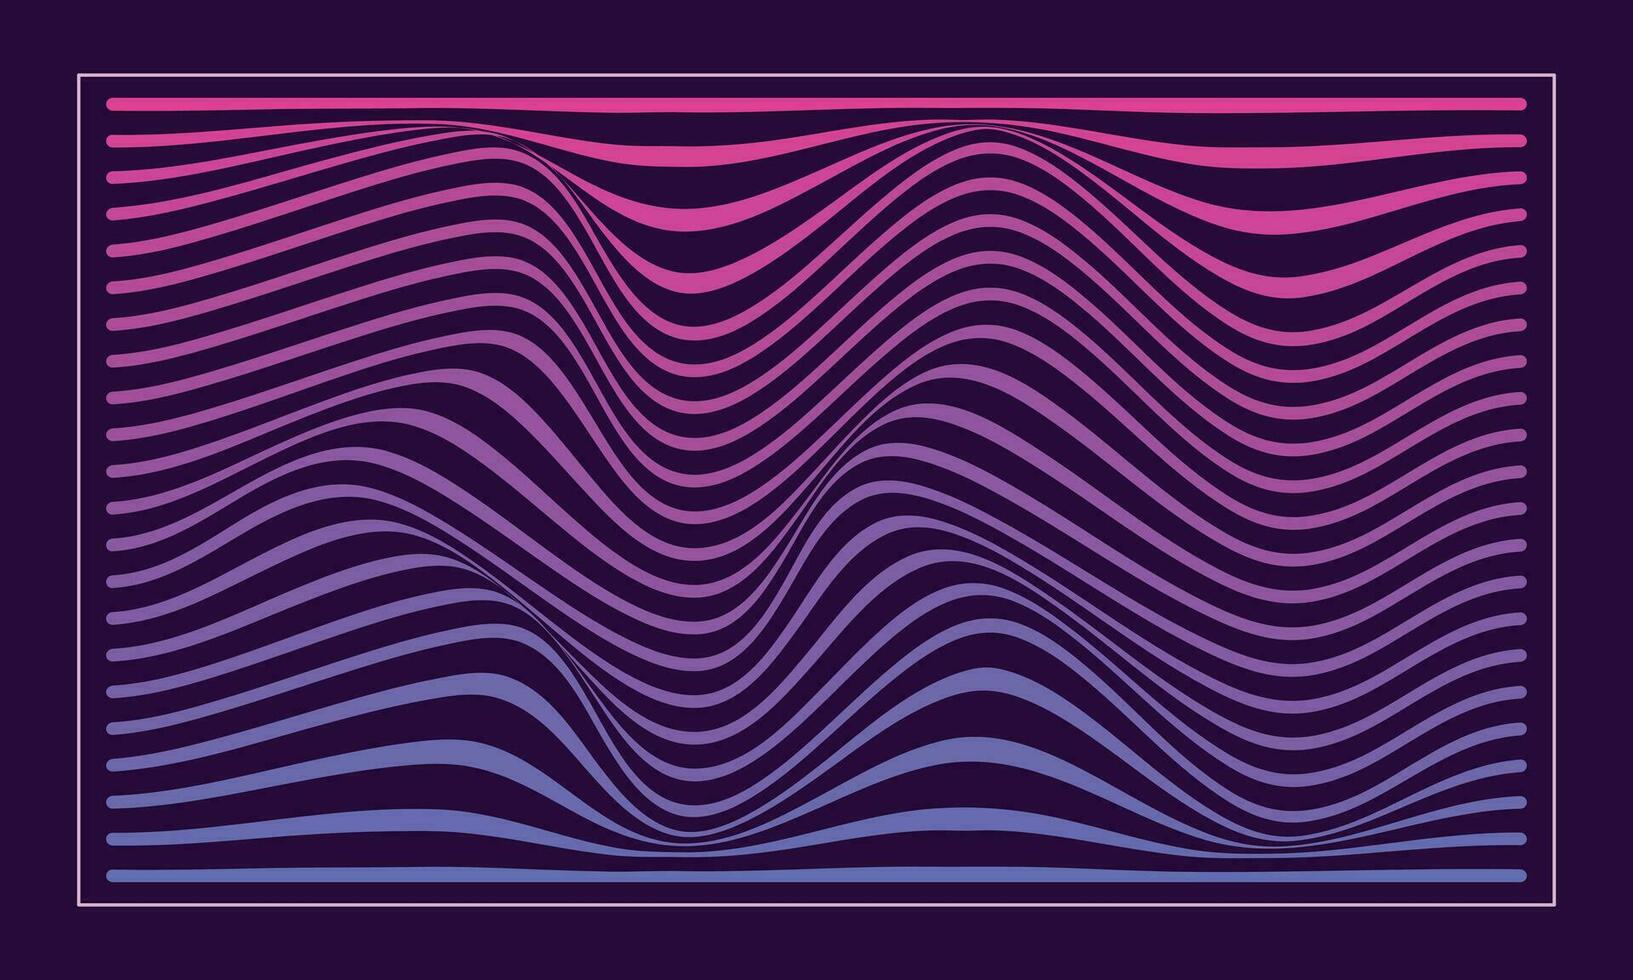 rosa, púrpura y azul ondulado líneas antecedentes modelo Copiar espacio. color degradado fondo diseño para póster, bandera, aterrizaje página, revista, folleto, folleto, o fondo de pantalla. vector